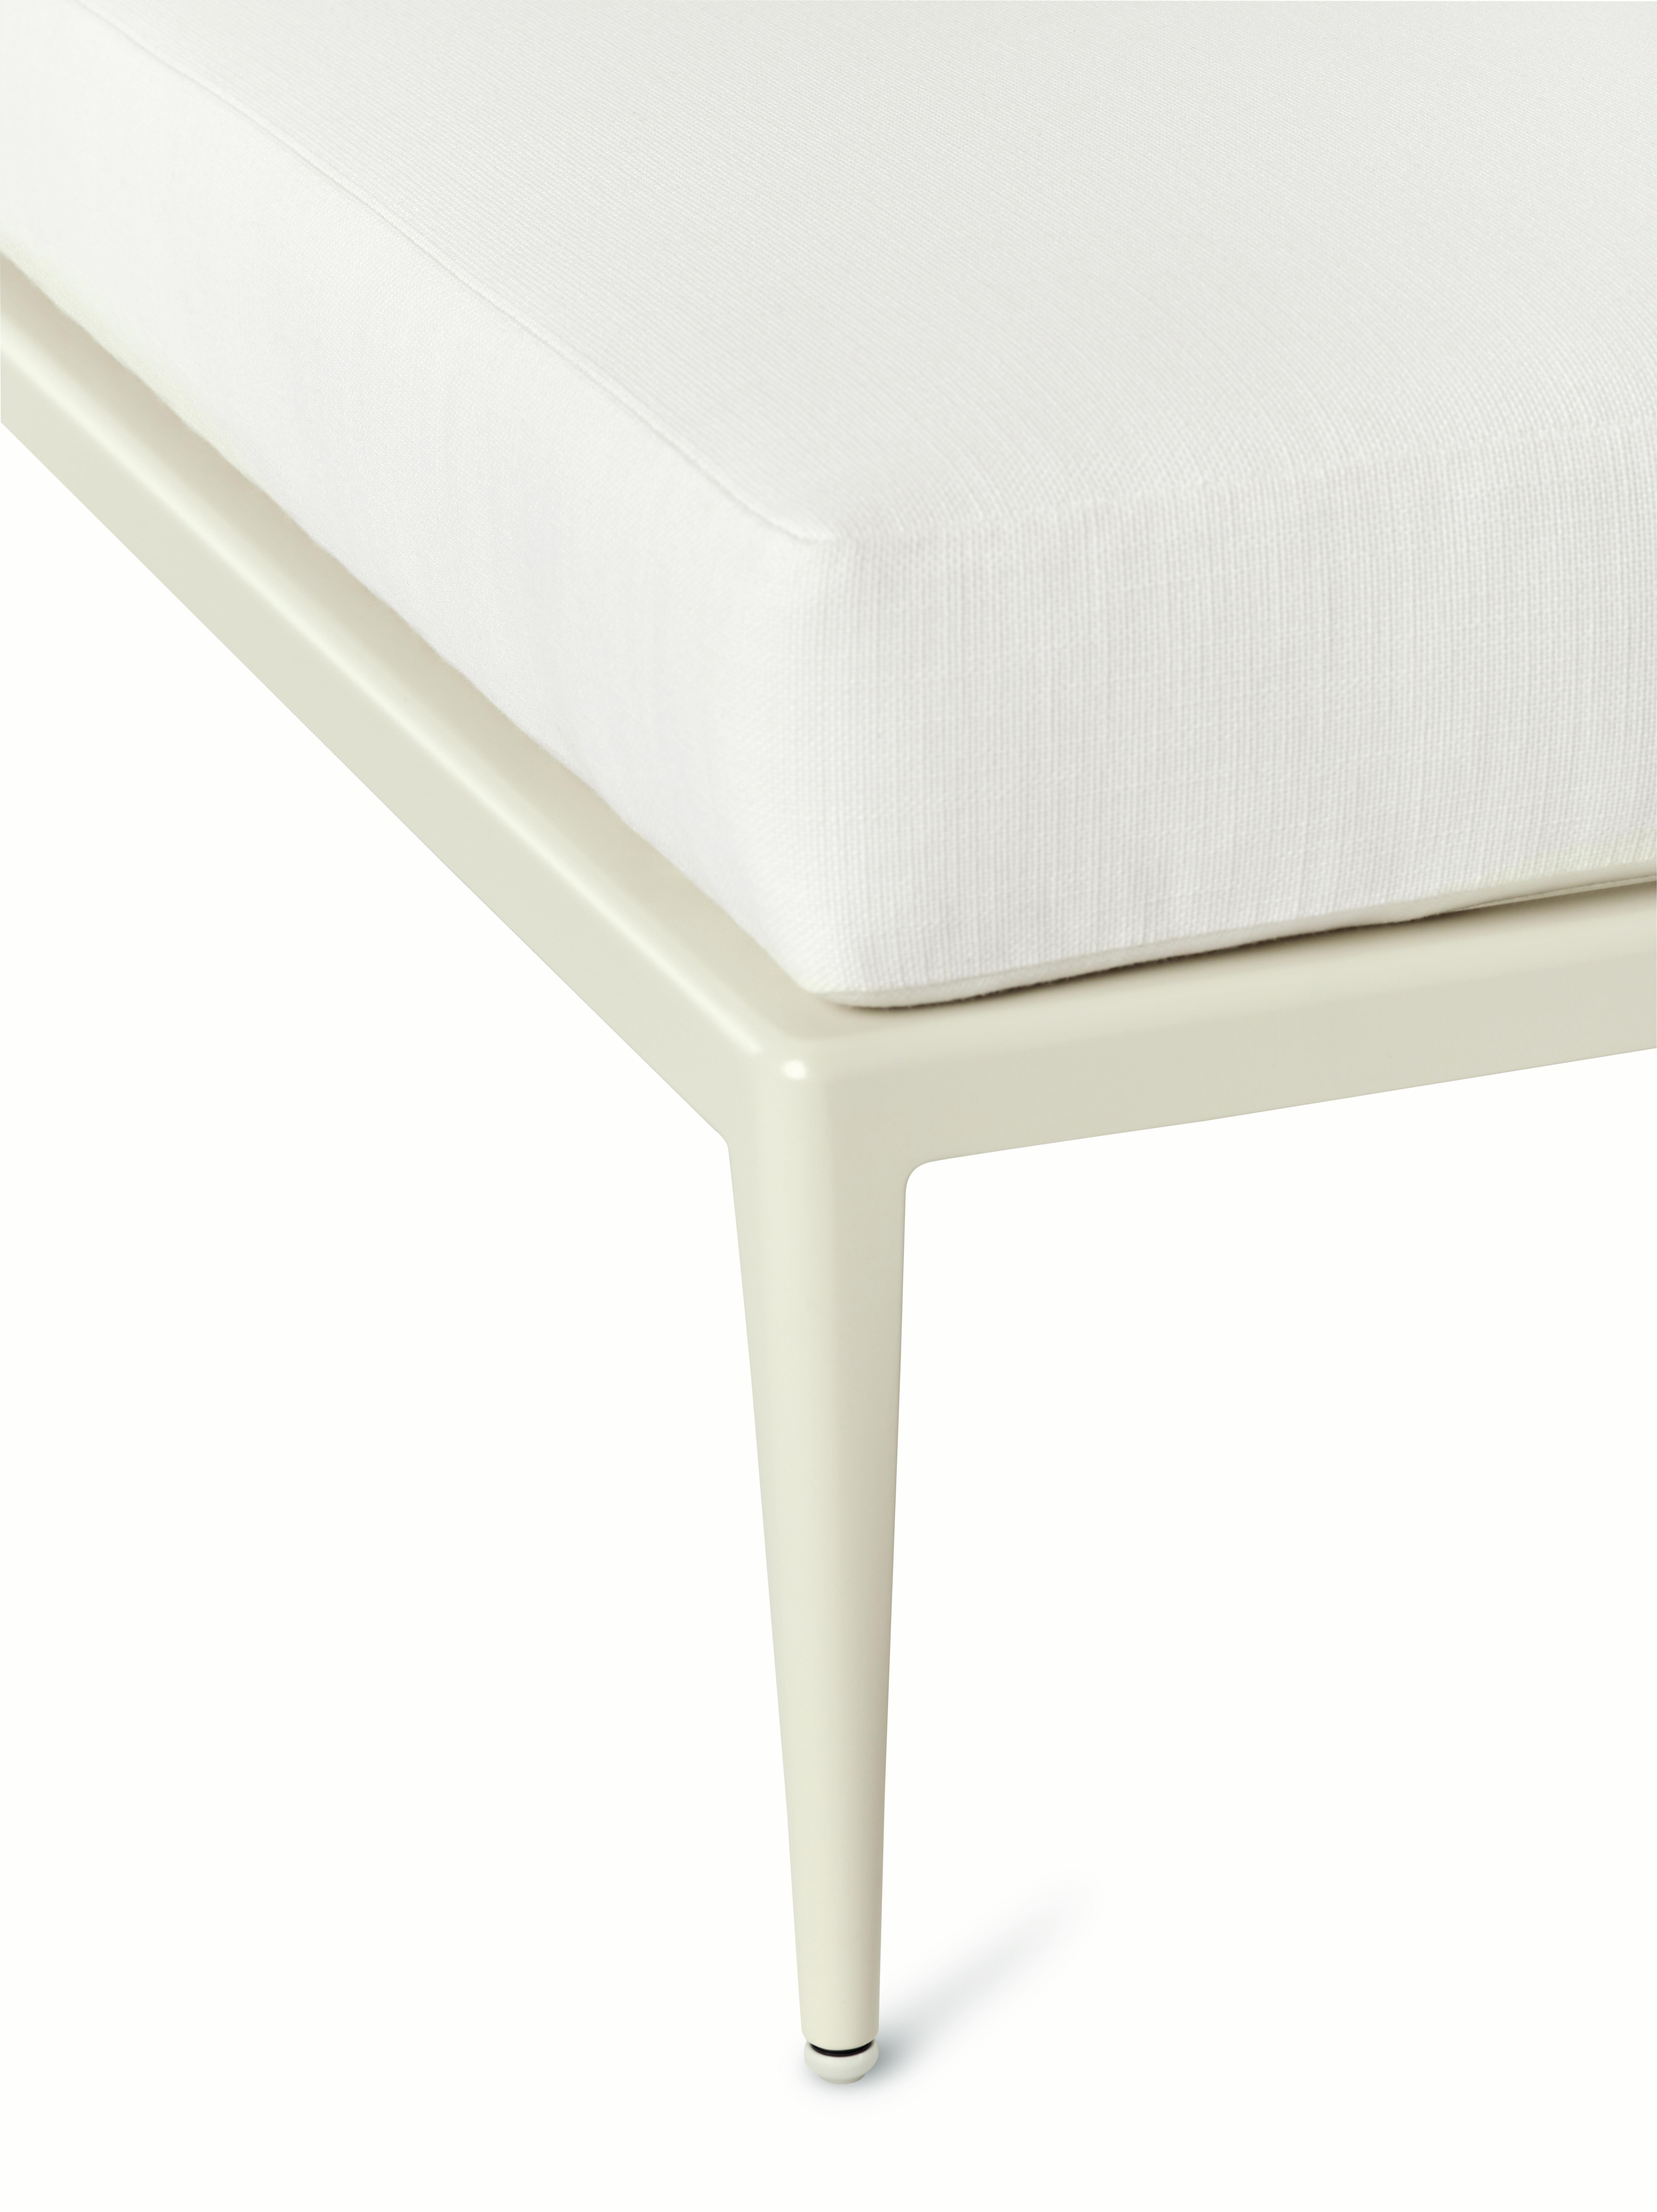 XXIe siècle et contemporain McKinnon and Harris Outdoor Furniture deCamp Sun Furniture Classic White finish  en vente